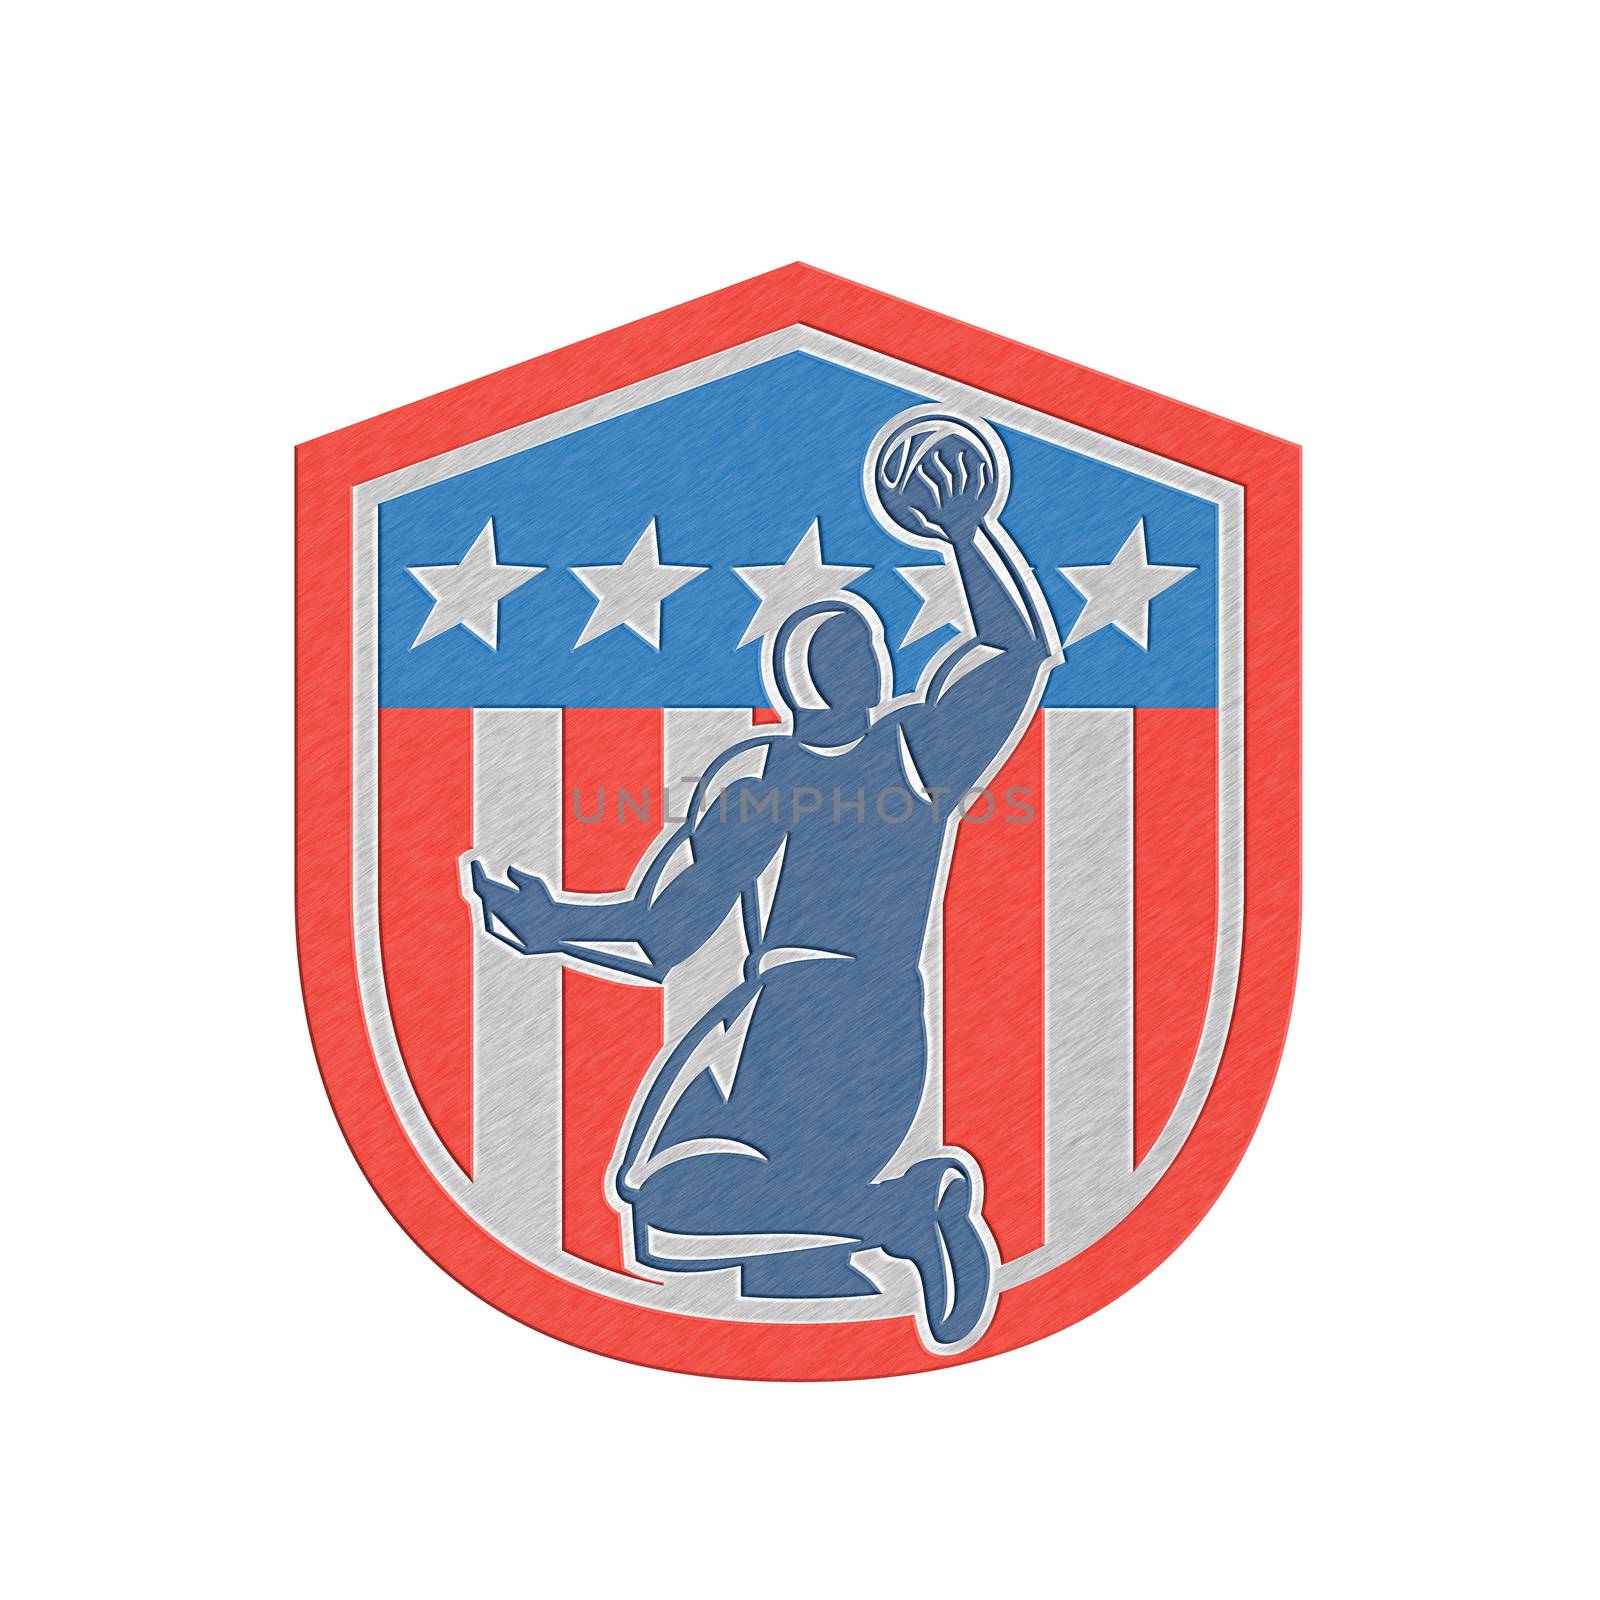 Metallic American Basketball Player Dunk Rear Shield Retro by patrimonio